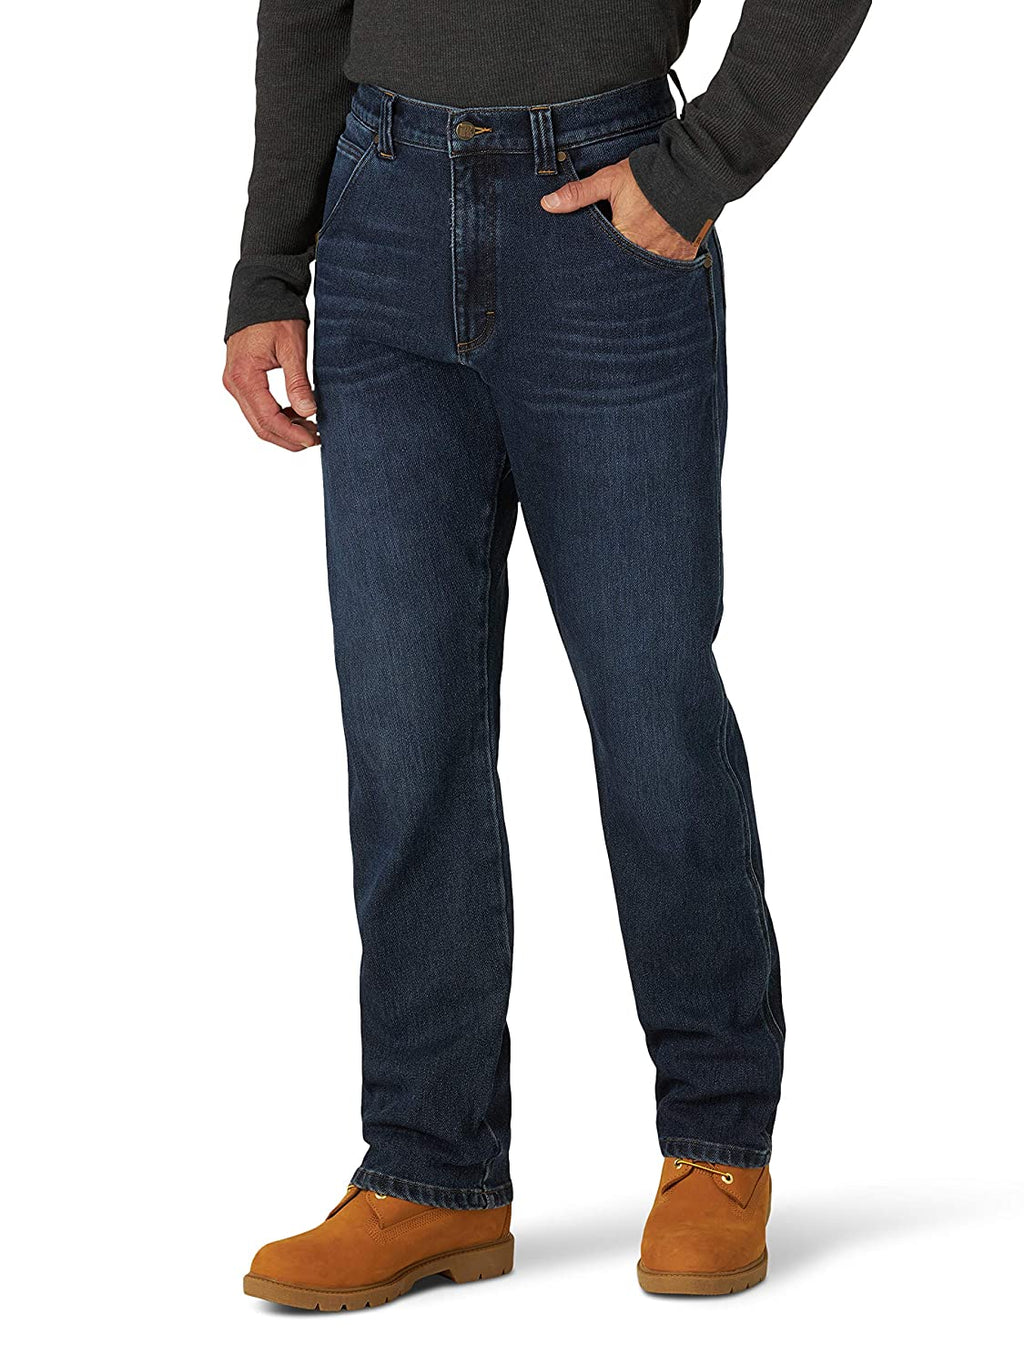 Men's Wrangler Riggs Workwear Men's Five Pocket Single Layer Insulated Jean